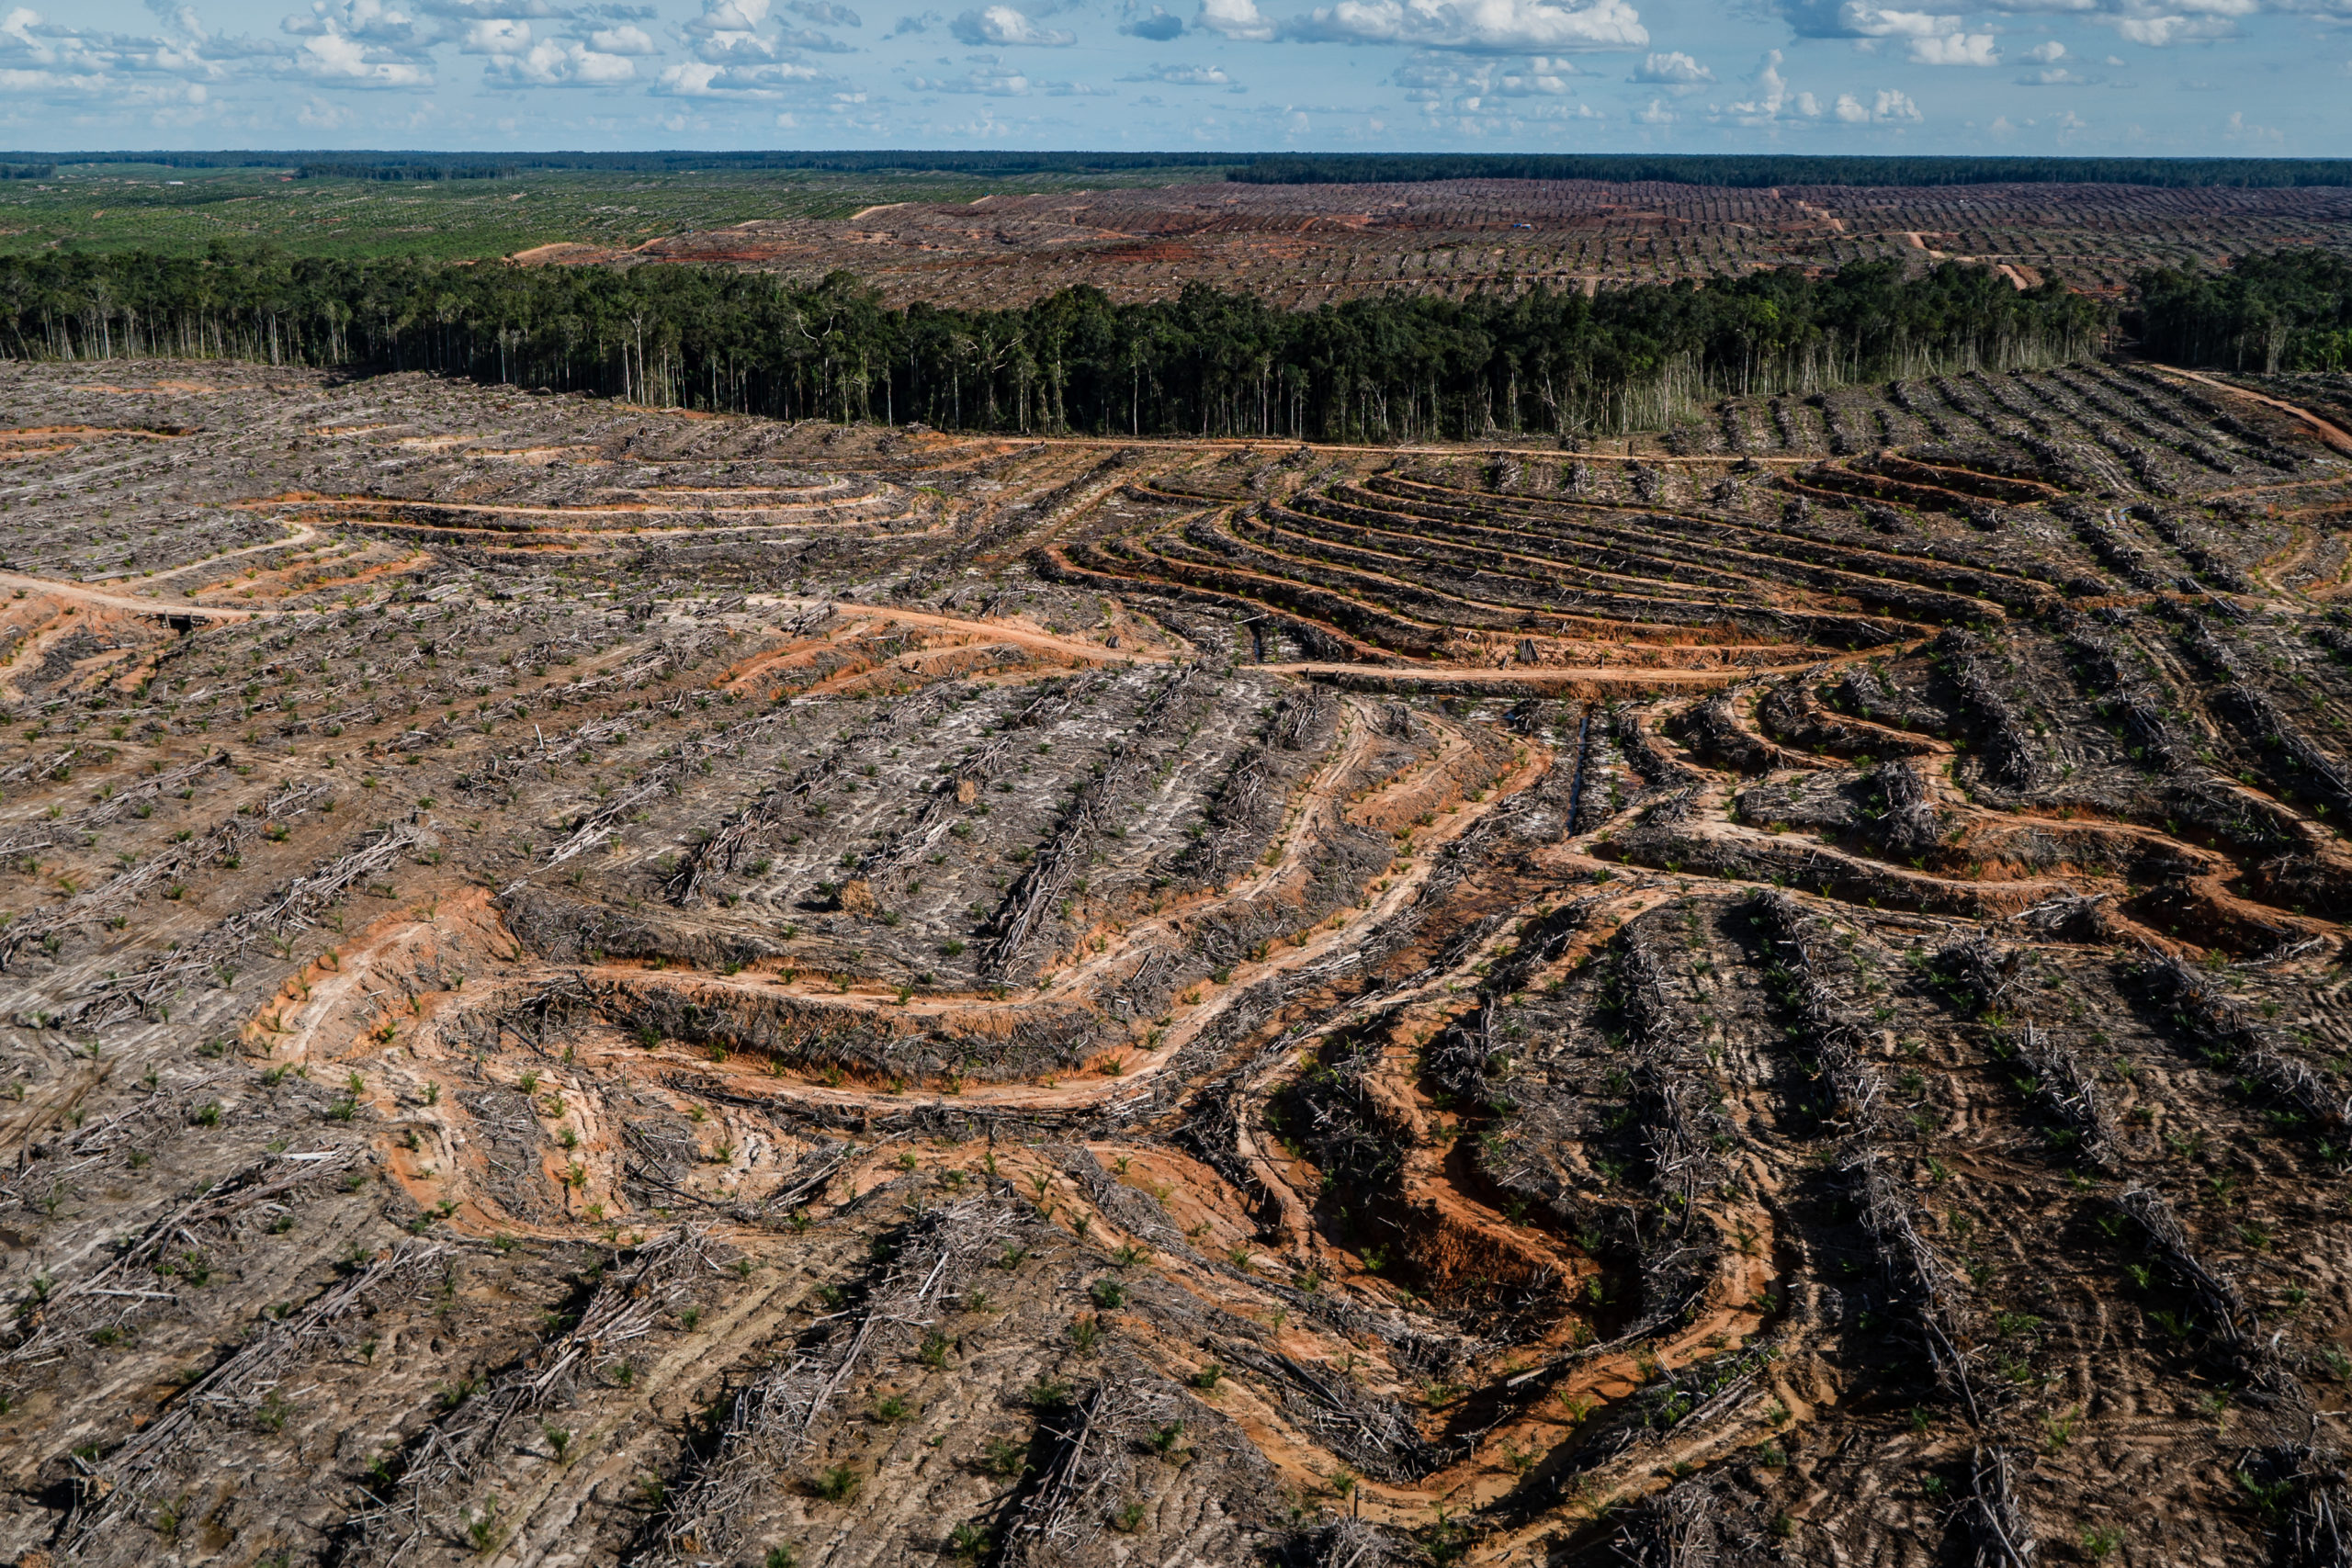 Deforestation is slowing, but palm oil still major driver